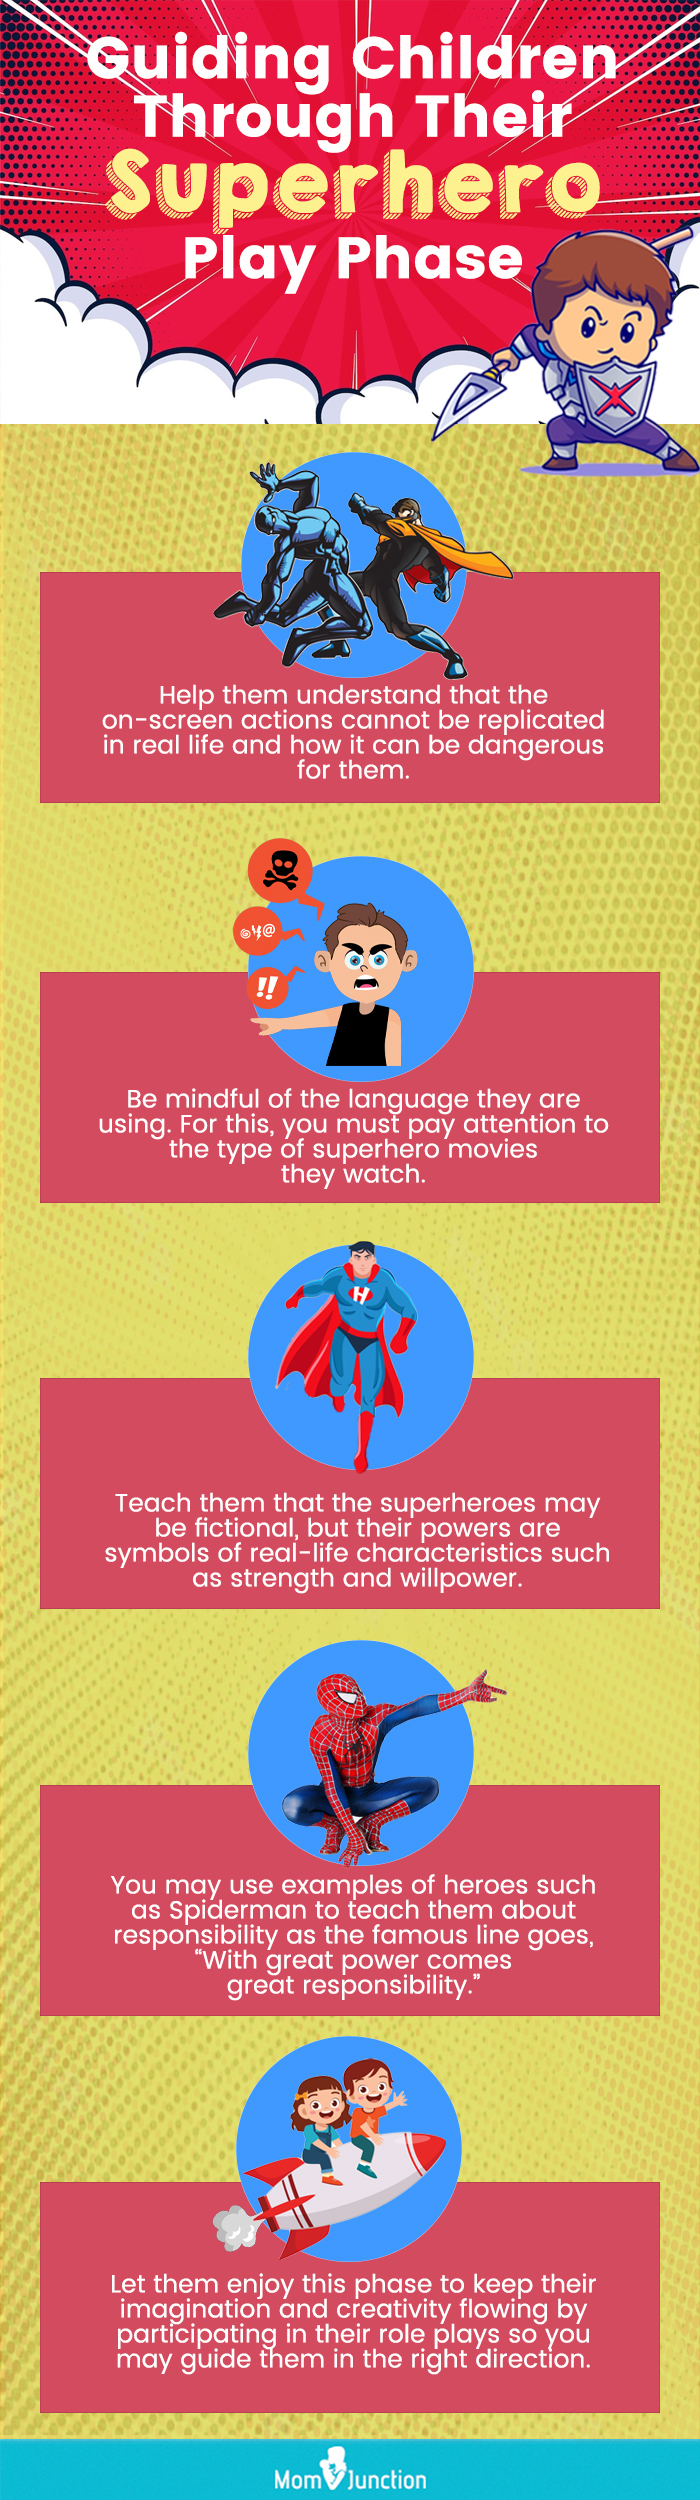 guiding children through their superhero play phase [infographic]